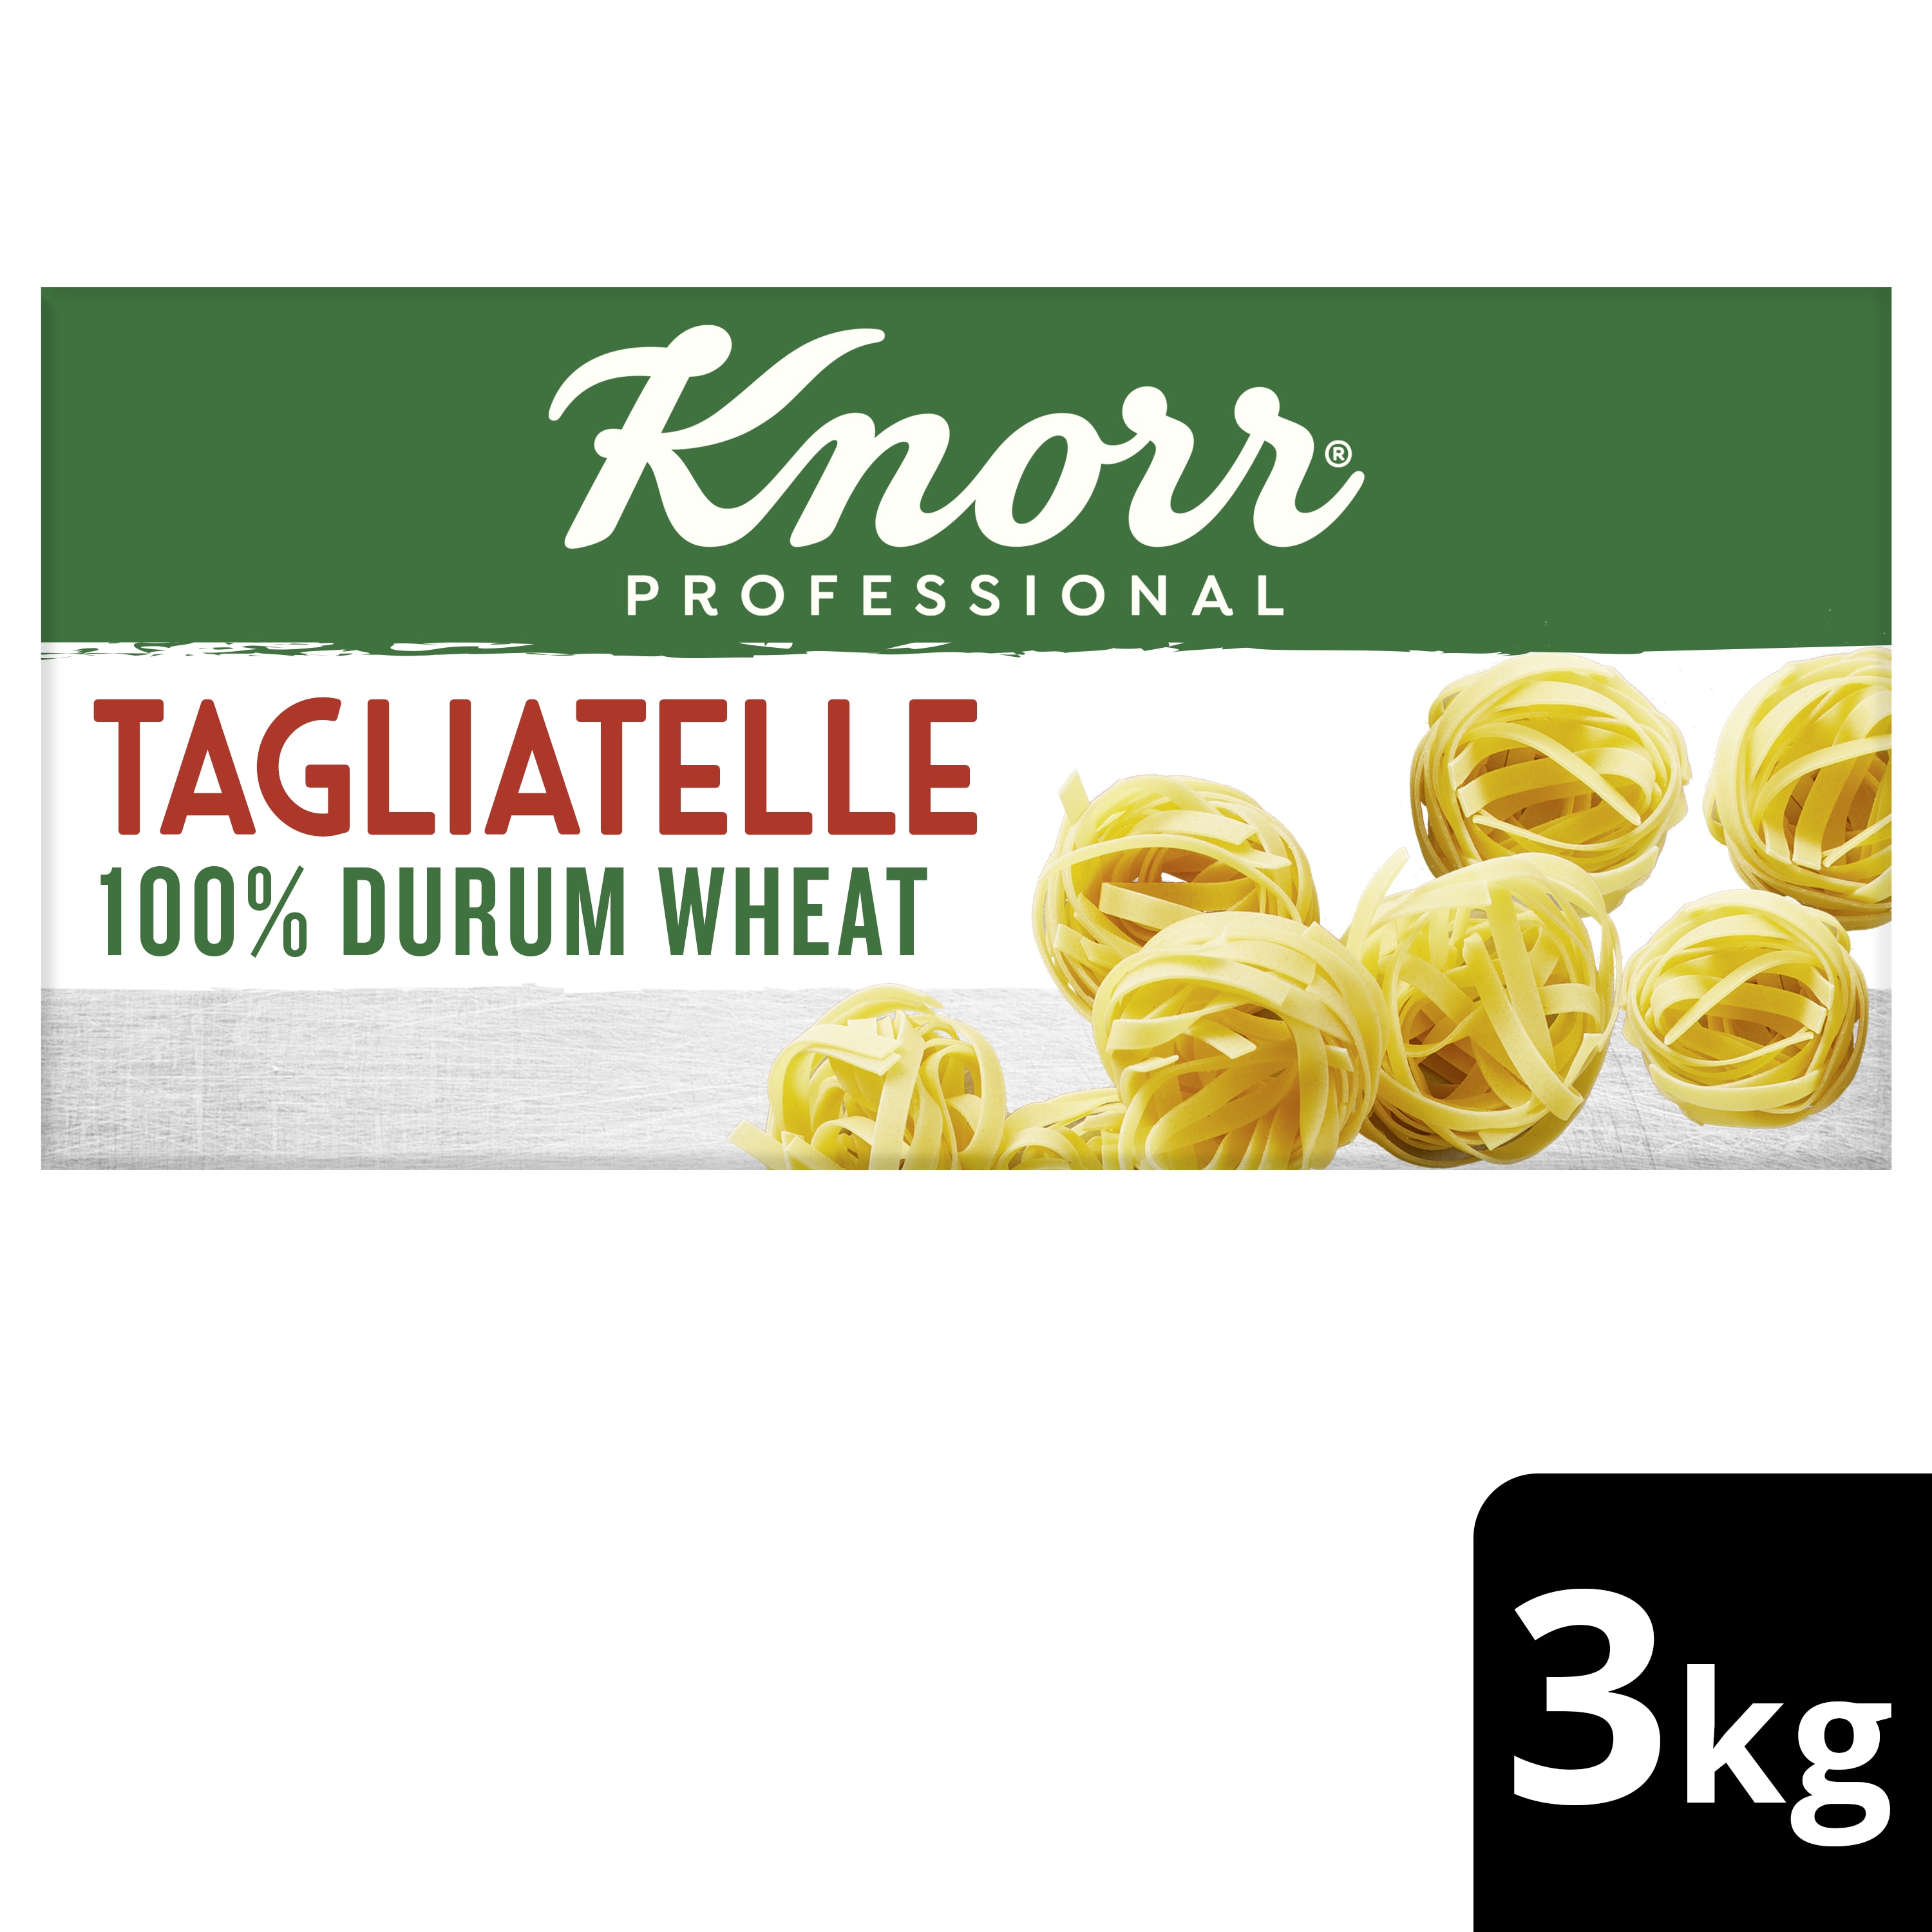 Knorr Professional Italiana Tagliatelle 3kg - 